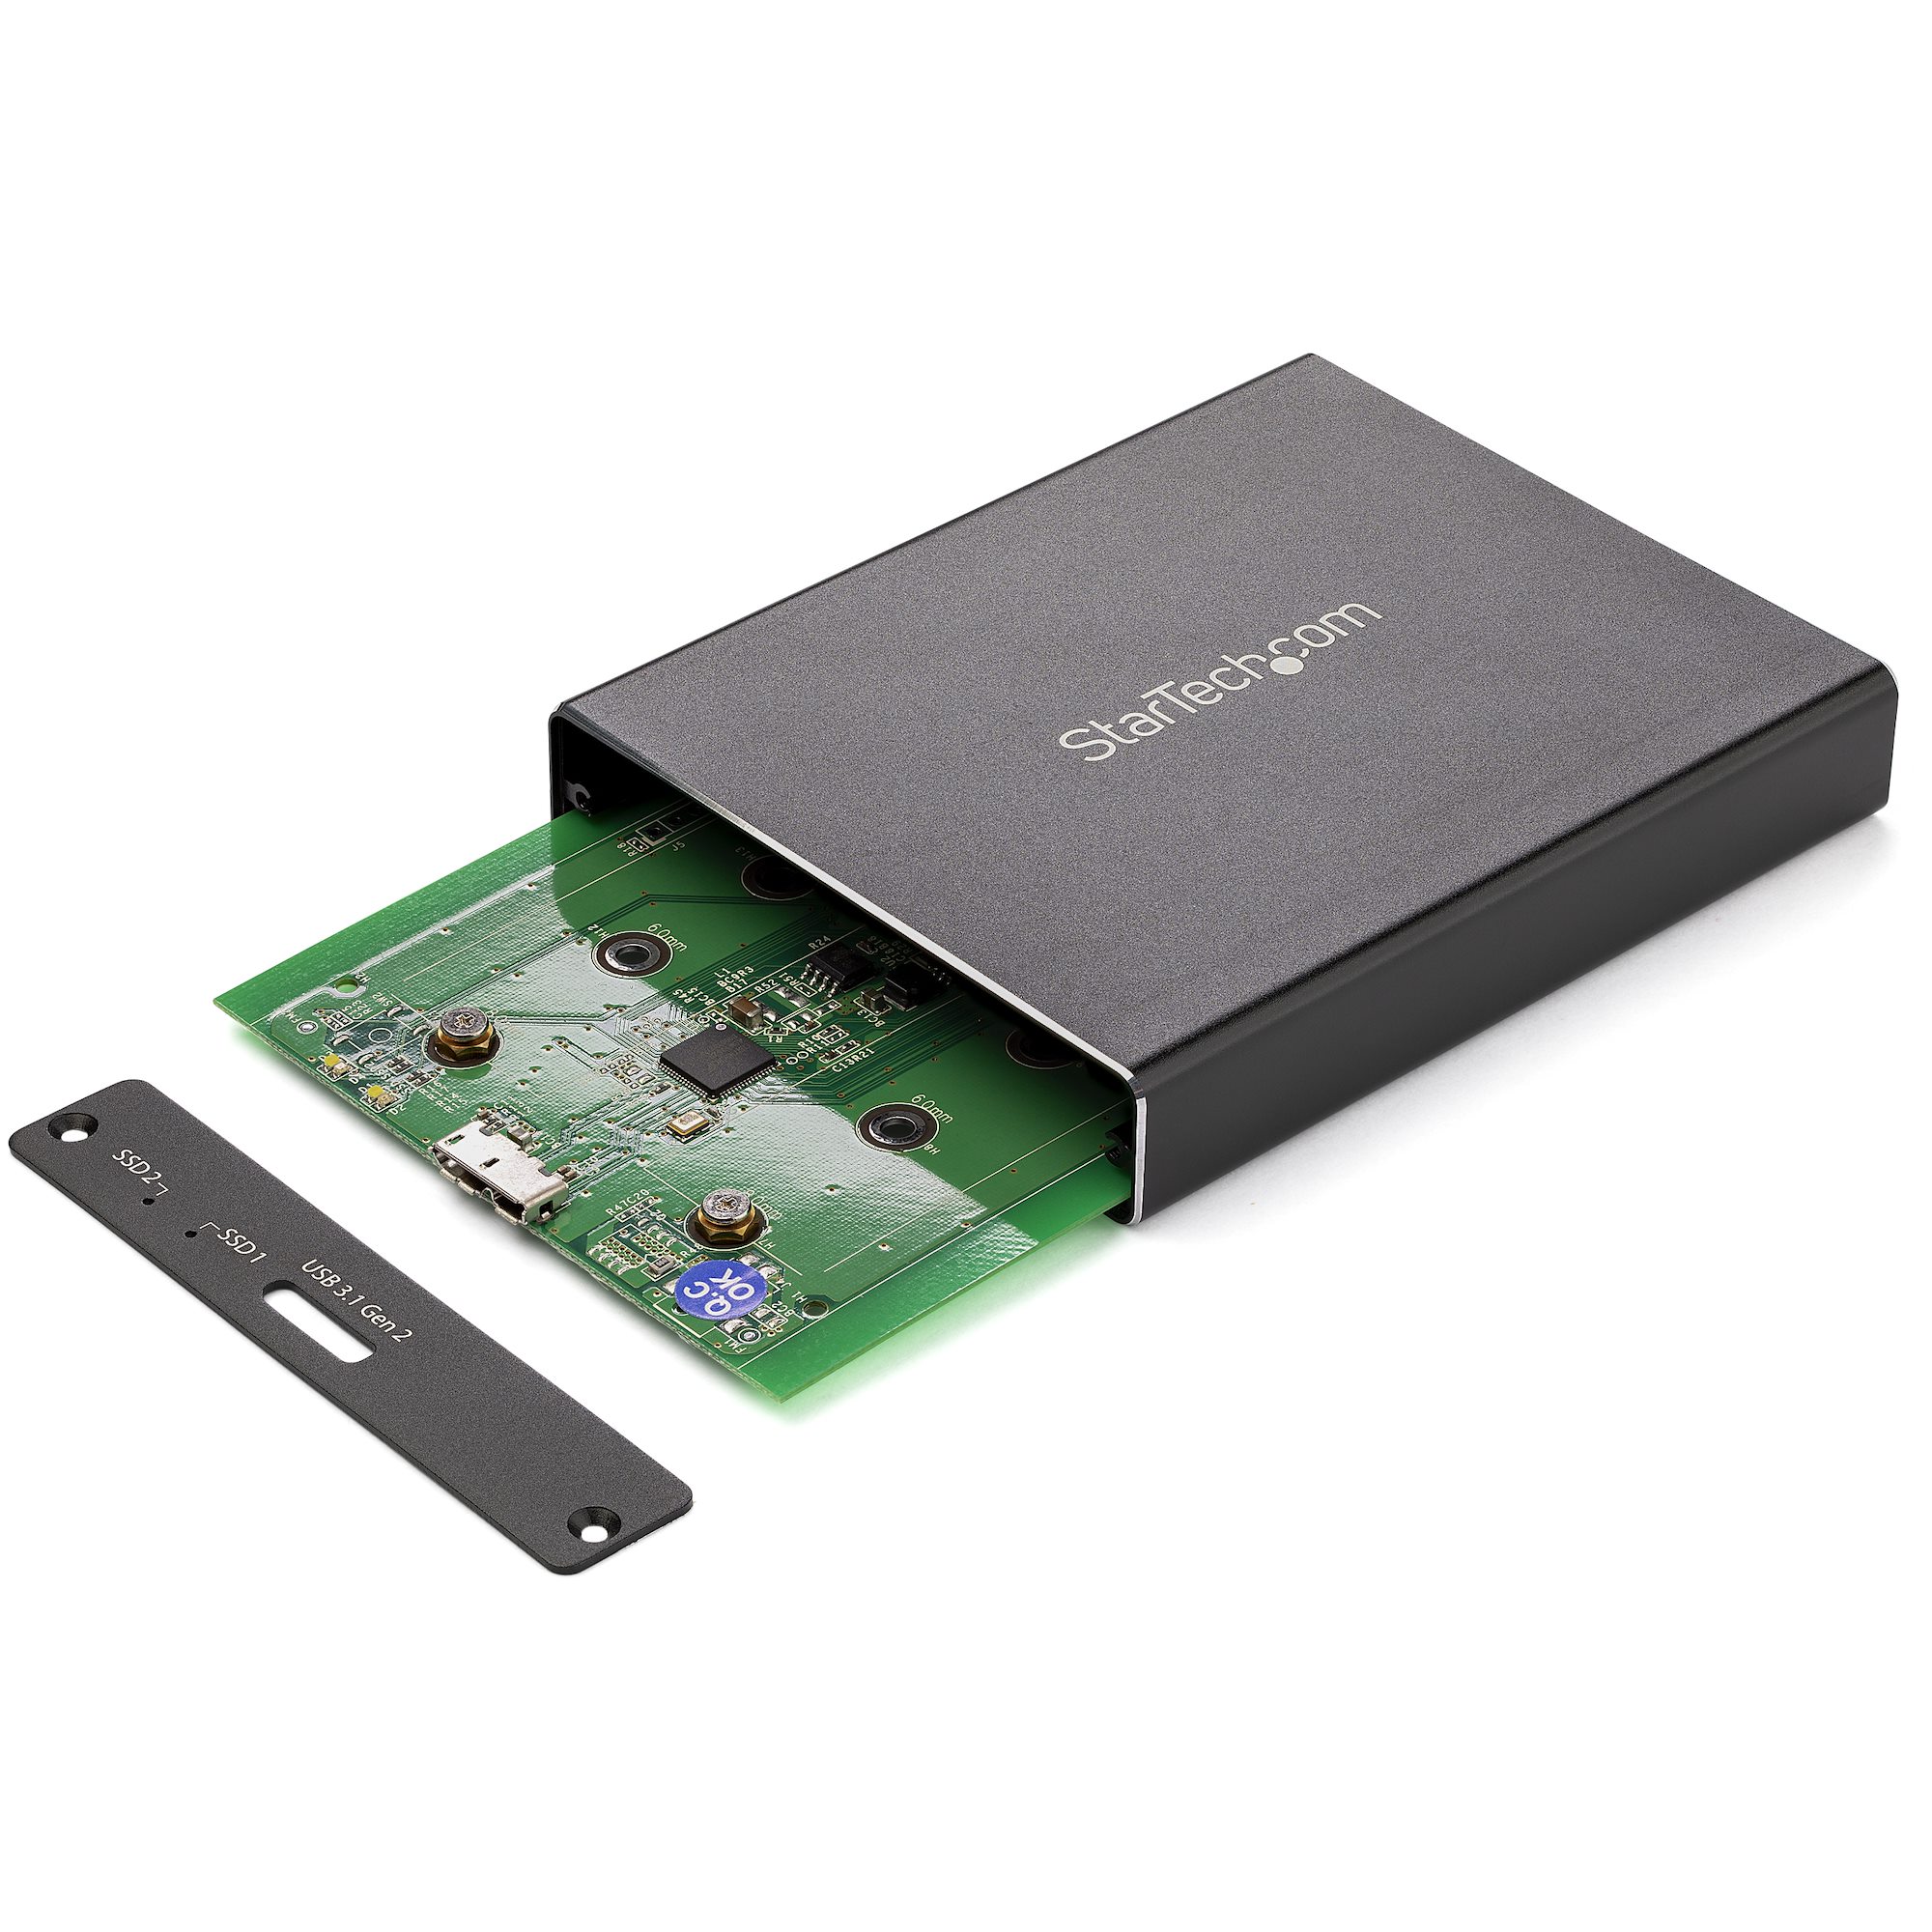 M.2 SATA SSD対応デュアルスロットアダプタケース USB 3.1(10Gbps)準拠 RAID対応